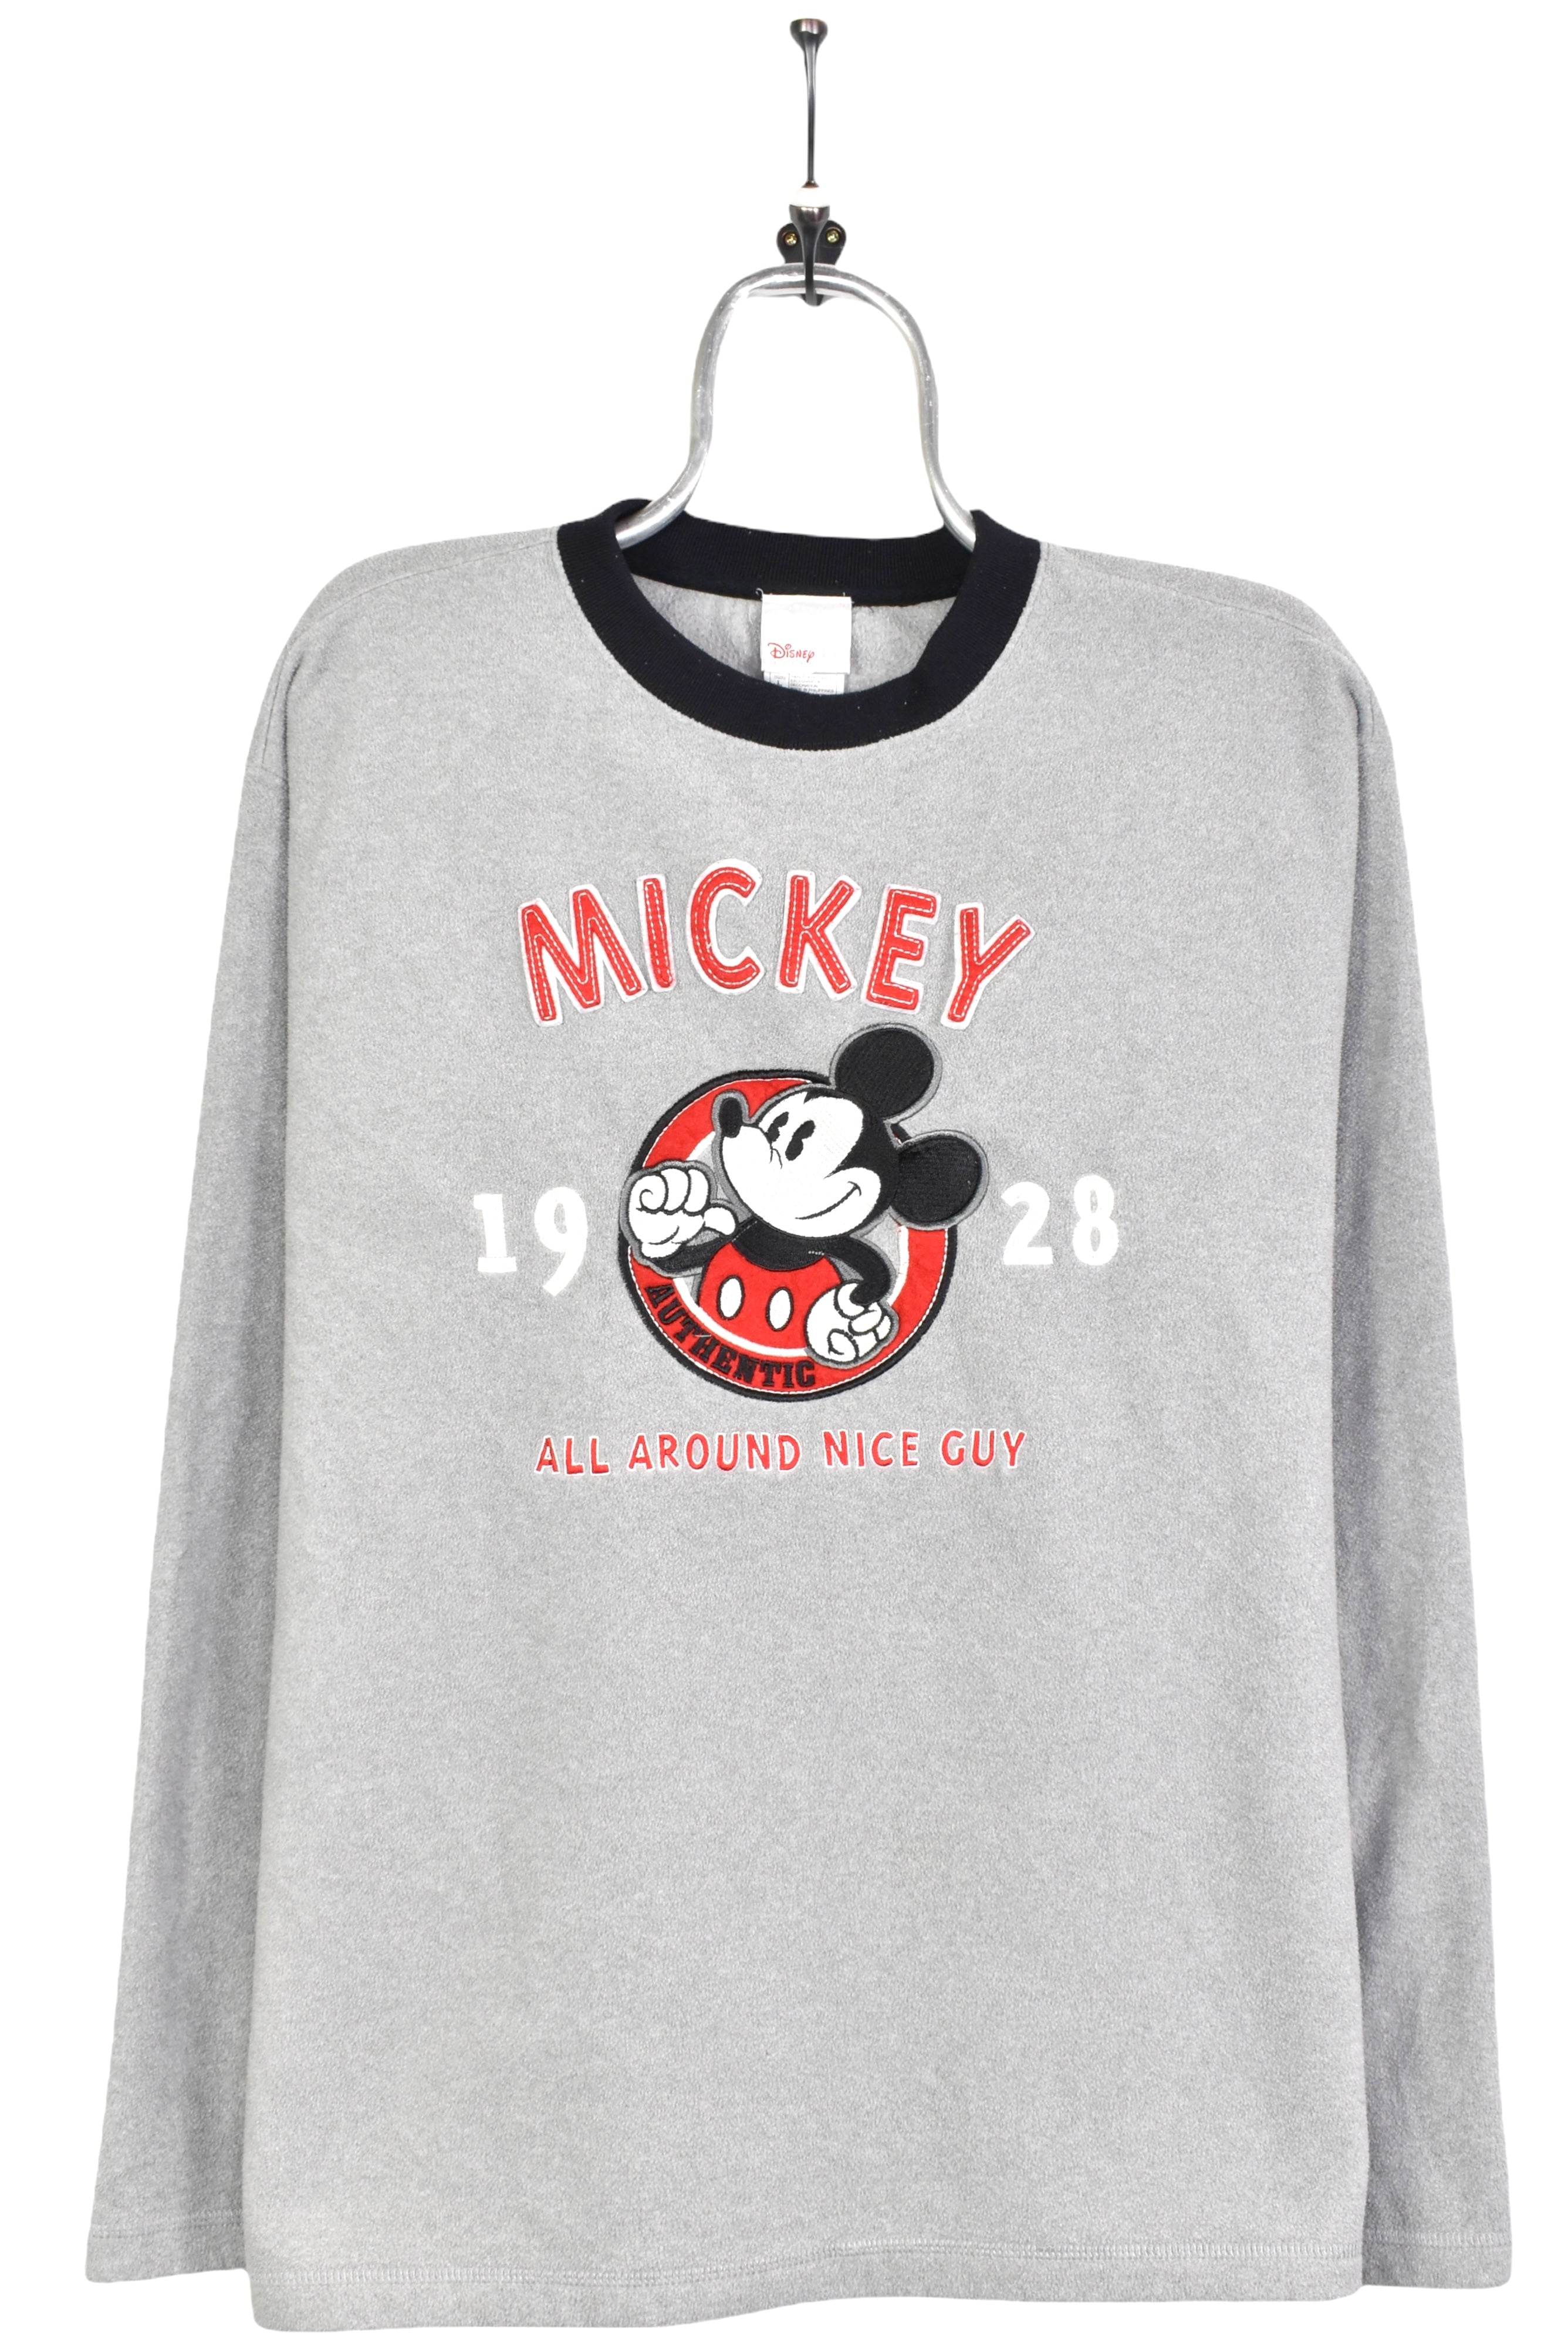 Vintage Disney Mickey Mouse embroidered grey fleece | Large DISNEY / CARTOON